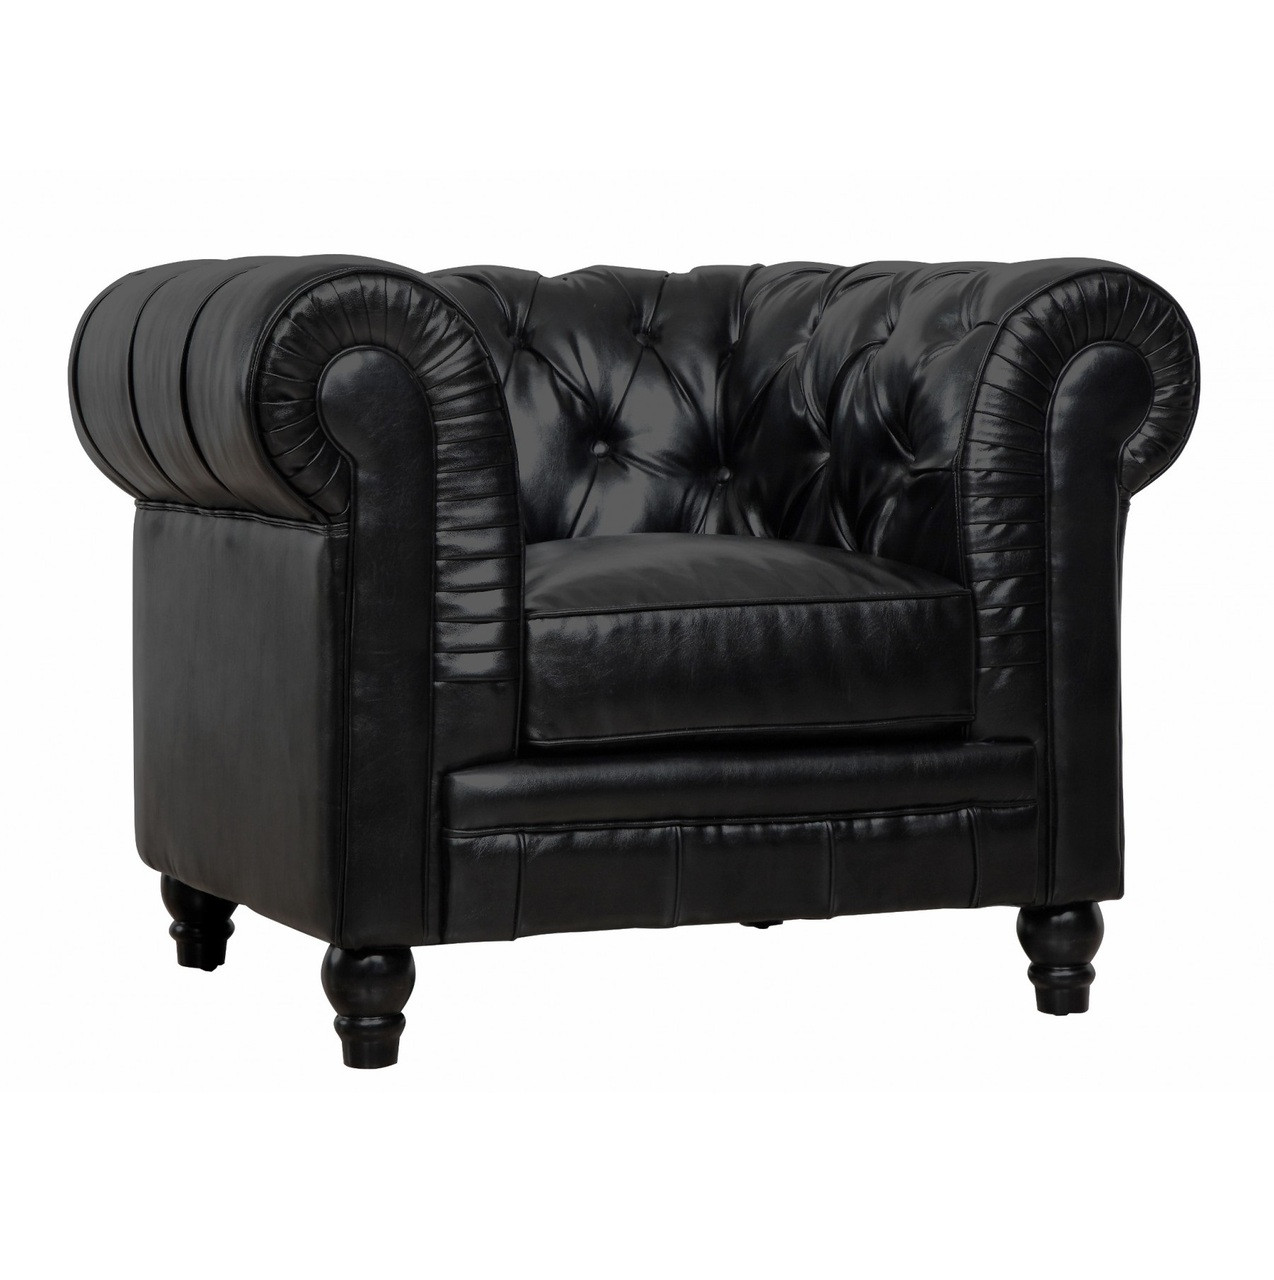 Zahara Black Leather Chesterfield Club Chair | Zin Home